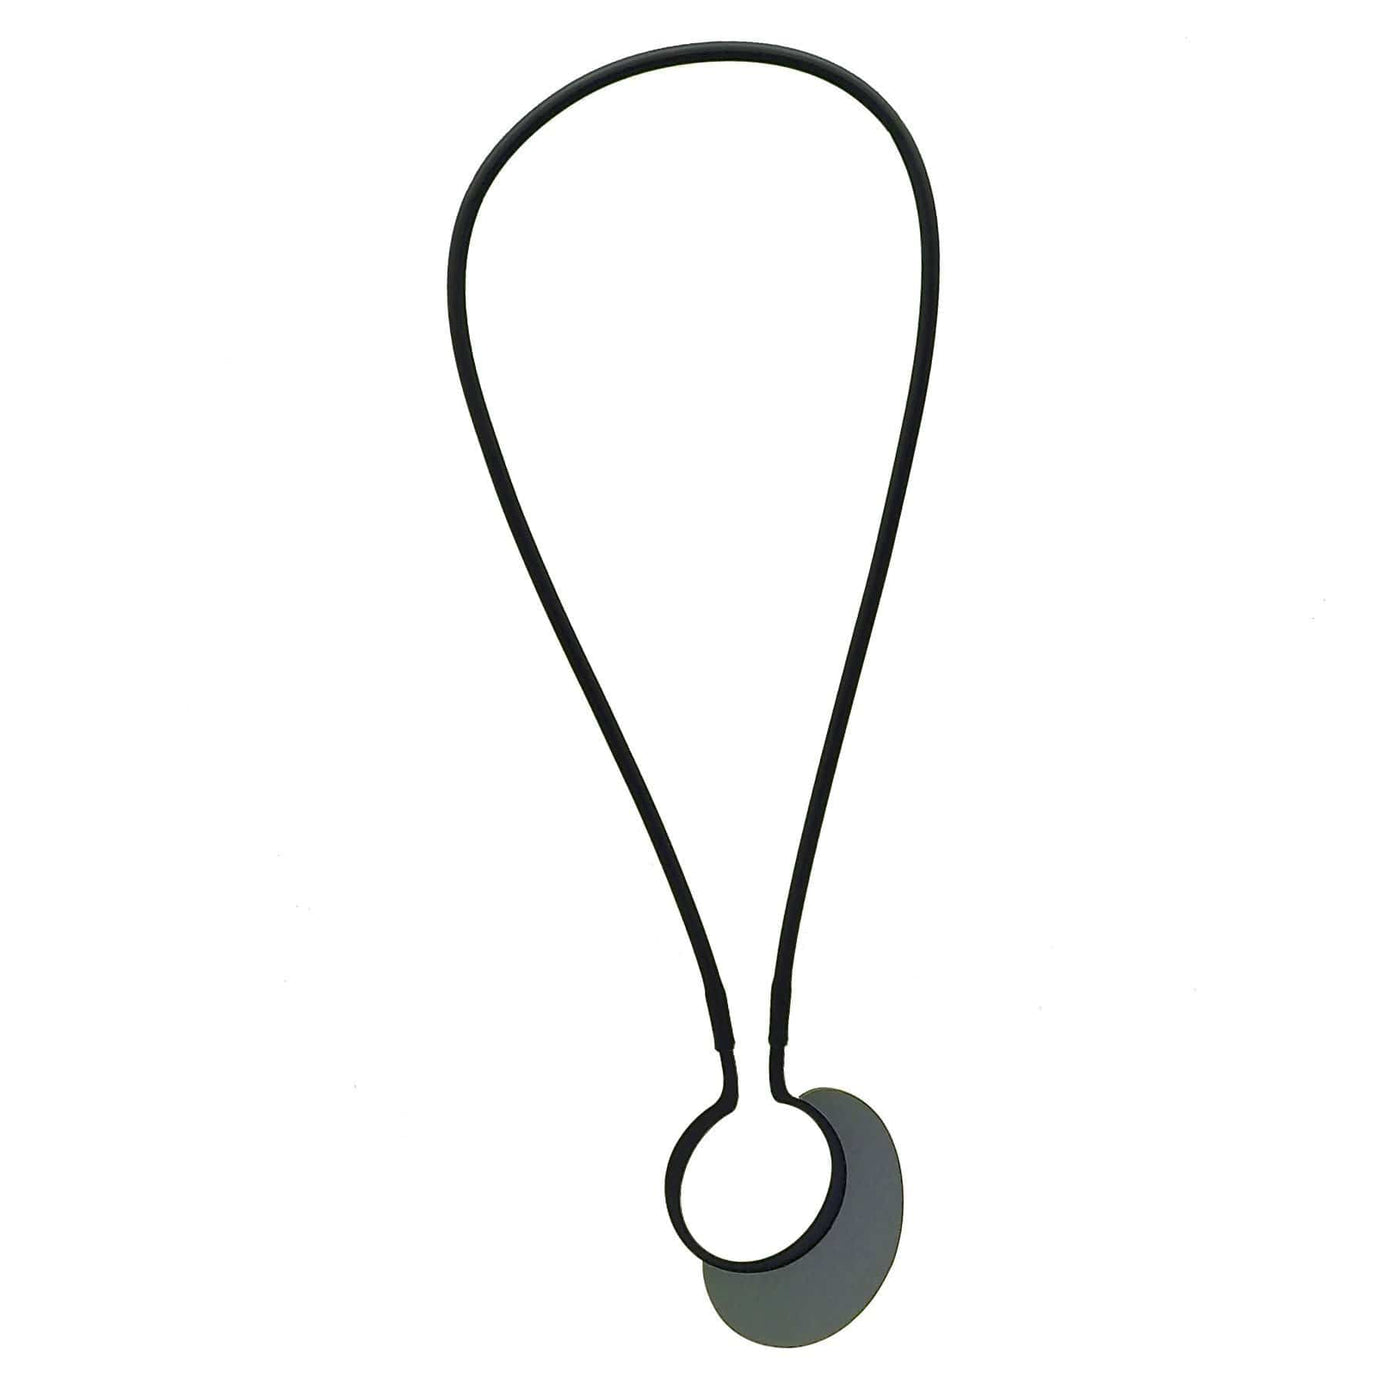 Contour Pebble Necklace - Ruby - inSync design